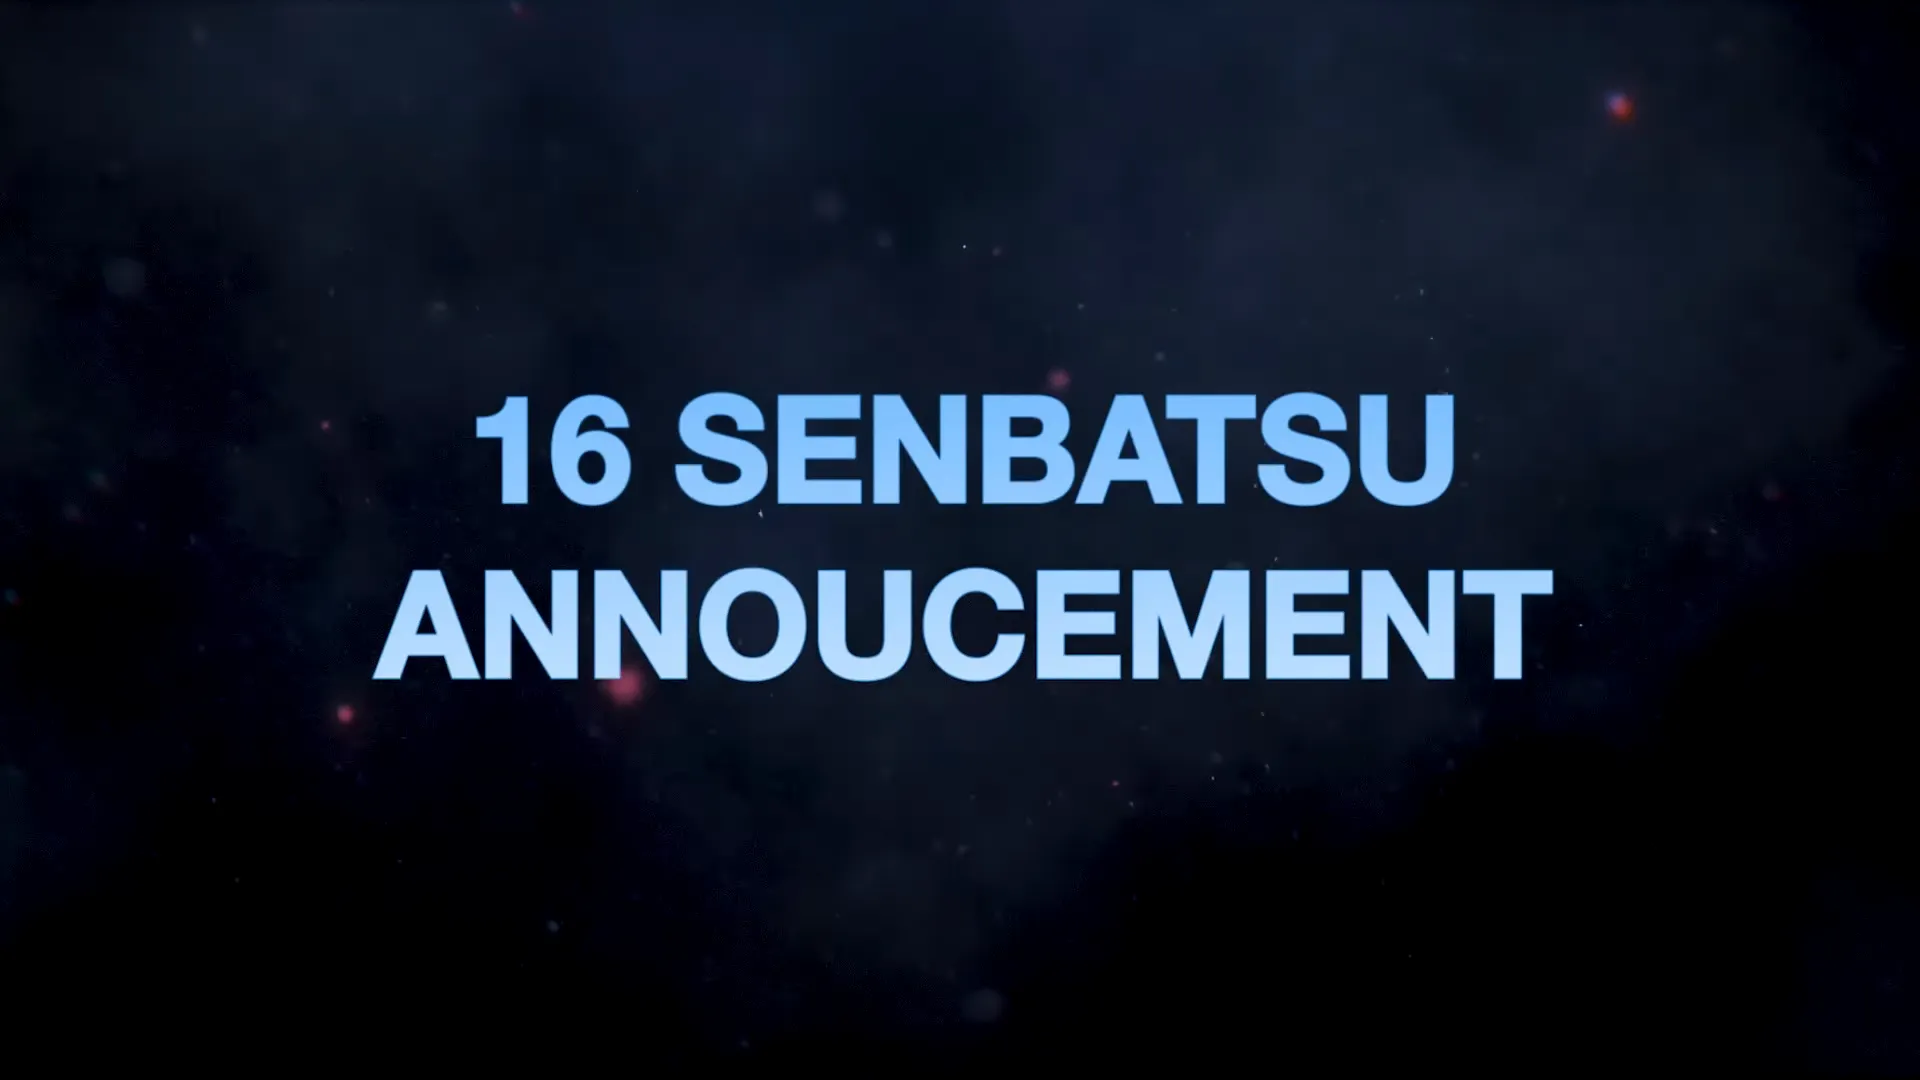 CGM48 5th Single Song and Senbatsu Announcement 0 14 screenshot w